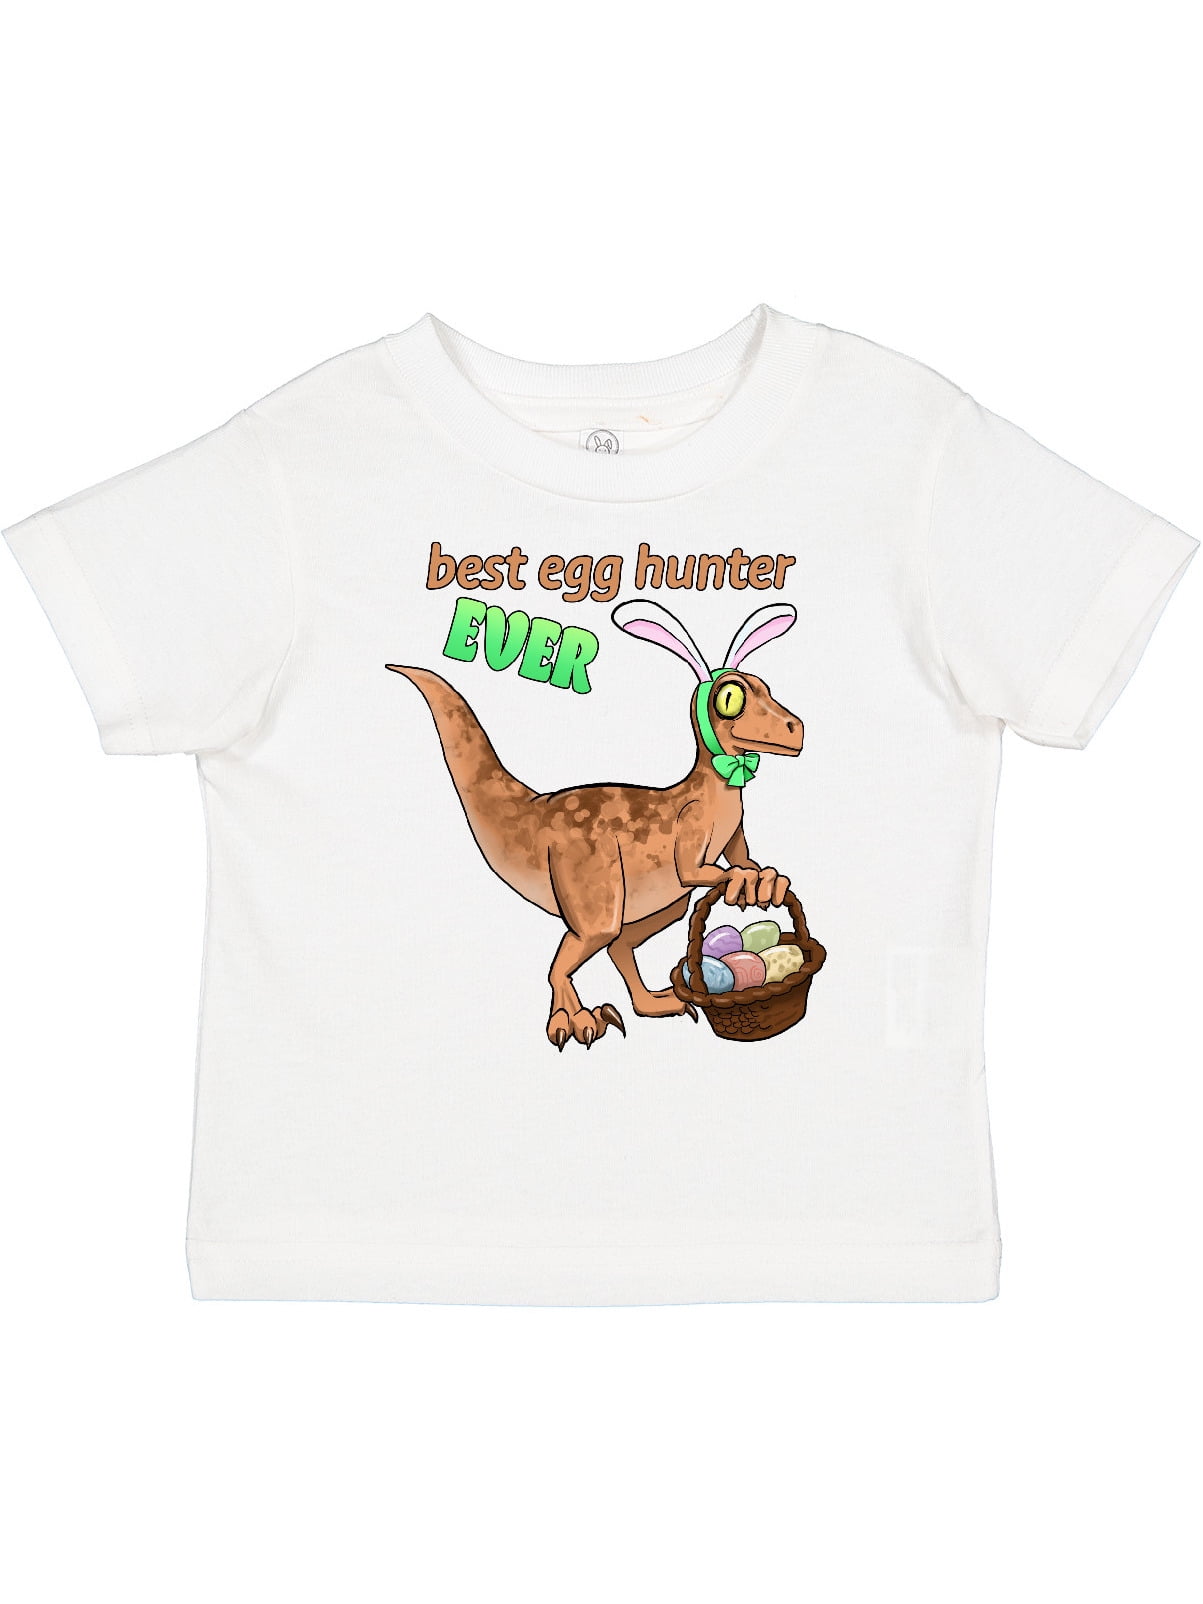 T Rex Skeleton Dinosaur Youth Boys and Girls Fashion Short Sleeve T-Shirt